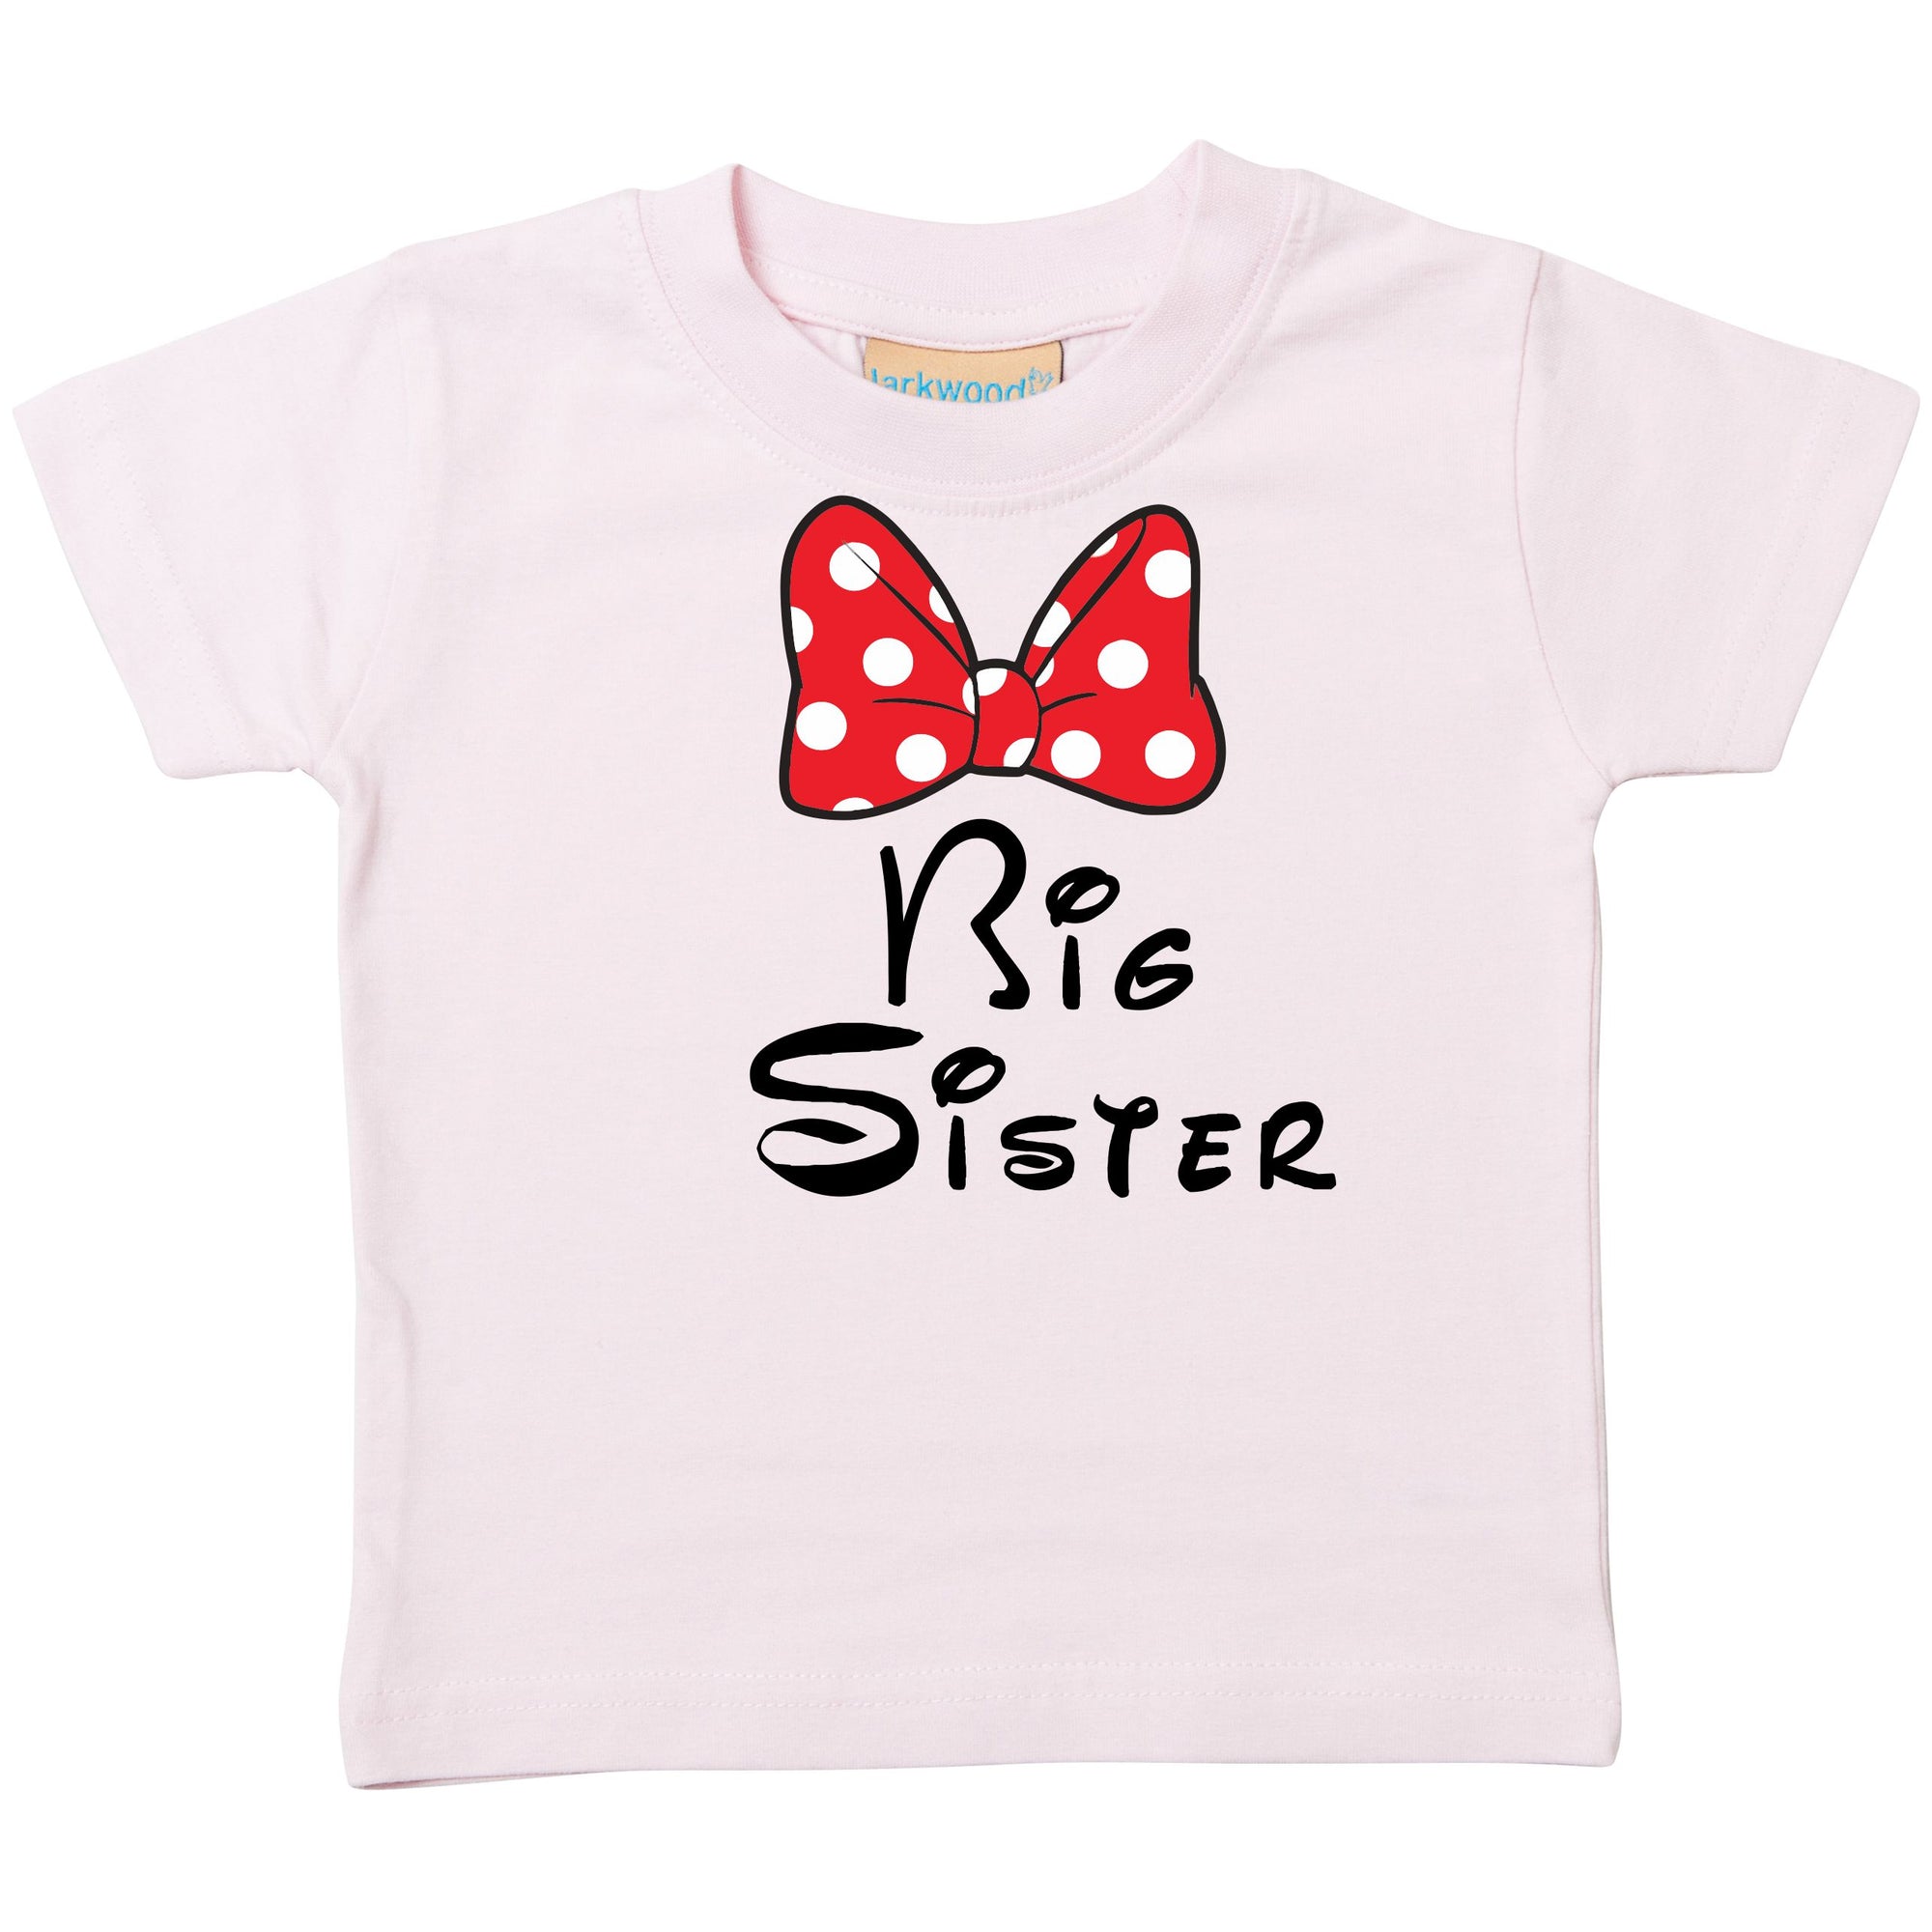 Big Sister (Disney) T-Shirt, Personalised Gift